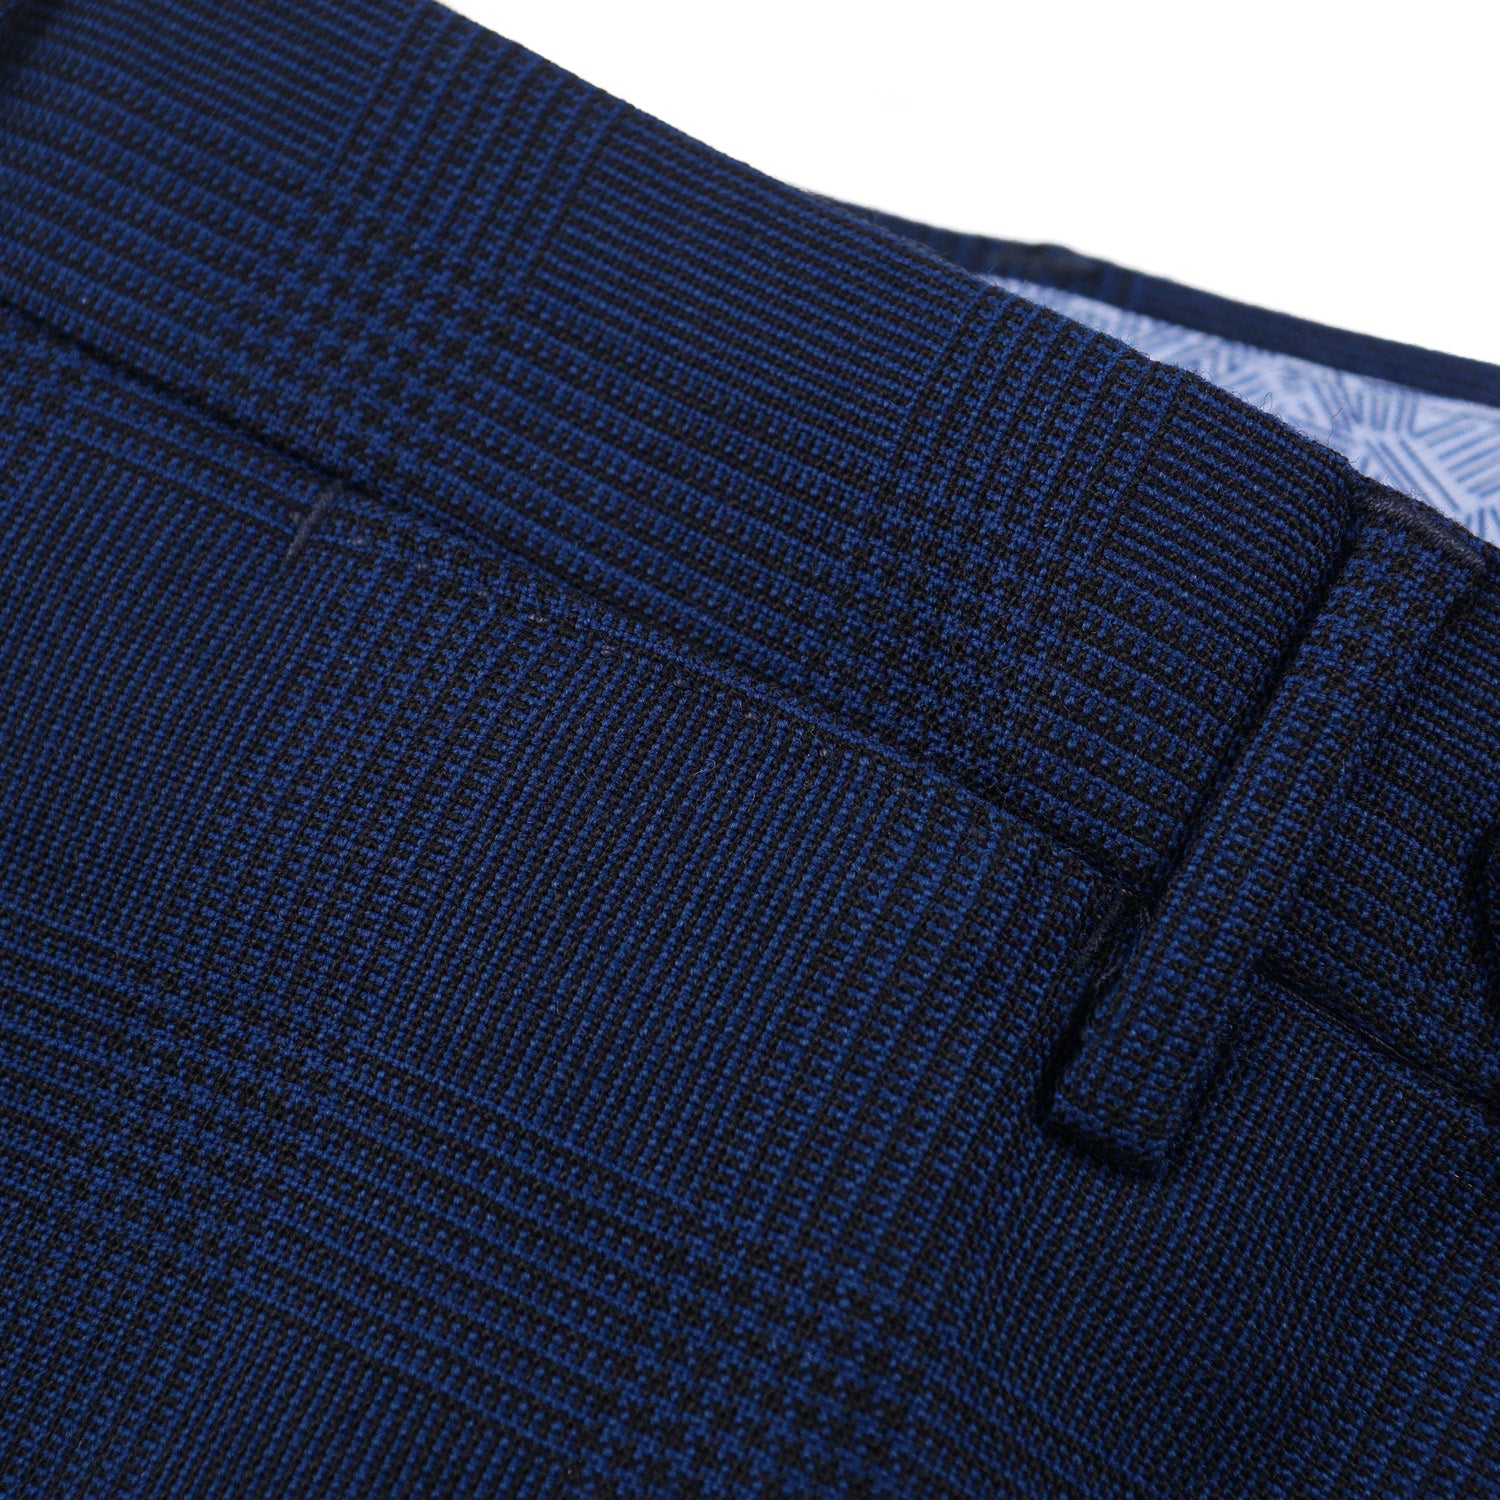 PT01 Slim-Fit Woven Wool Pants - Top Shelf Apparel